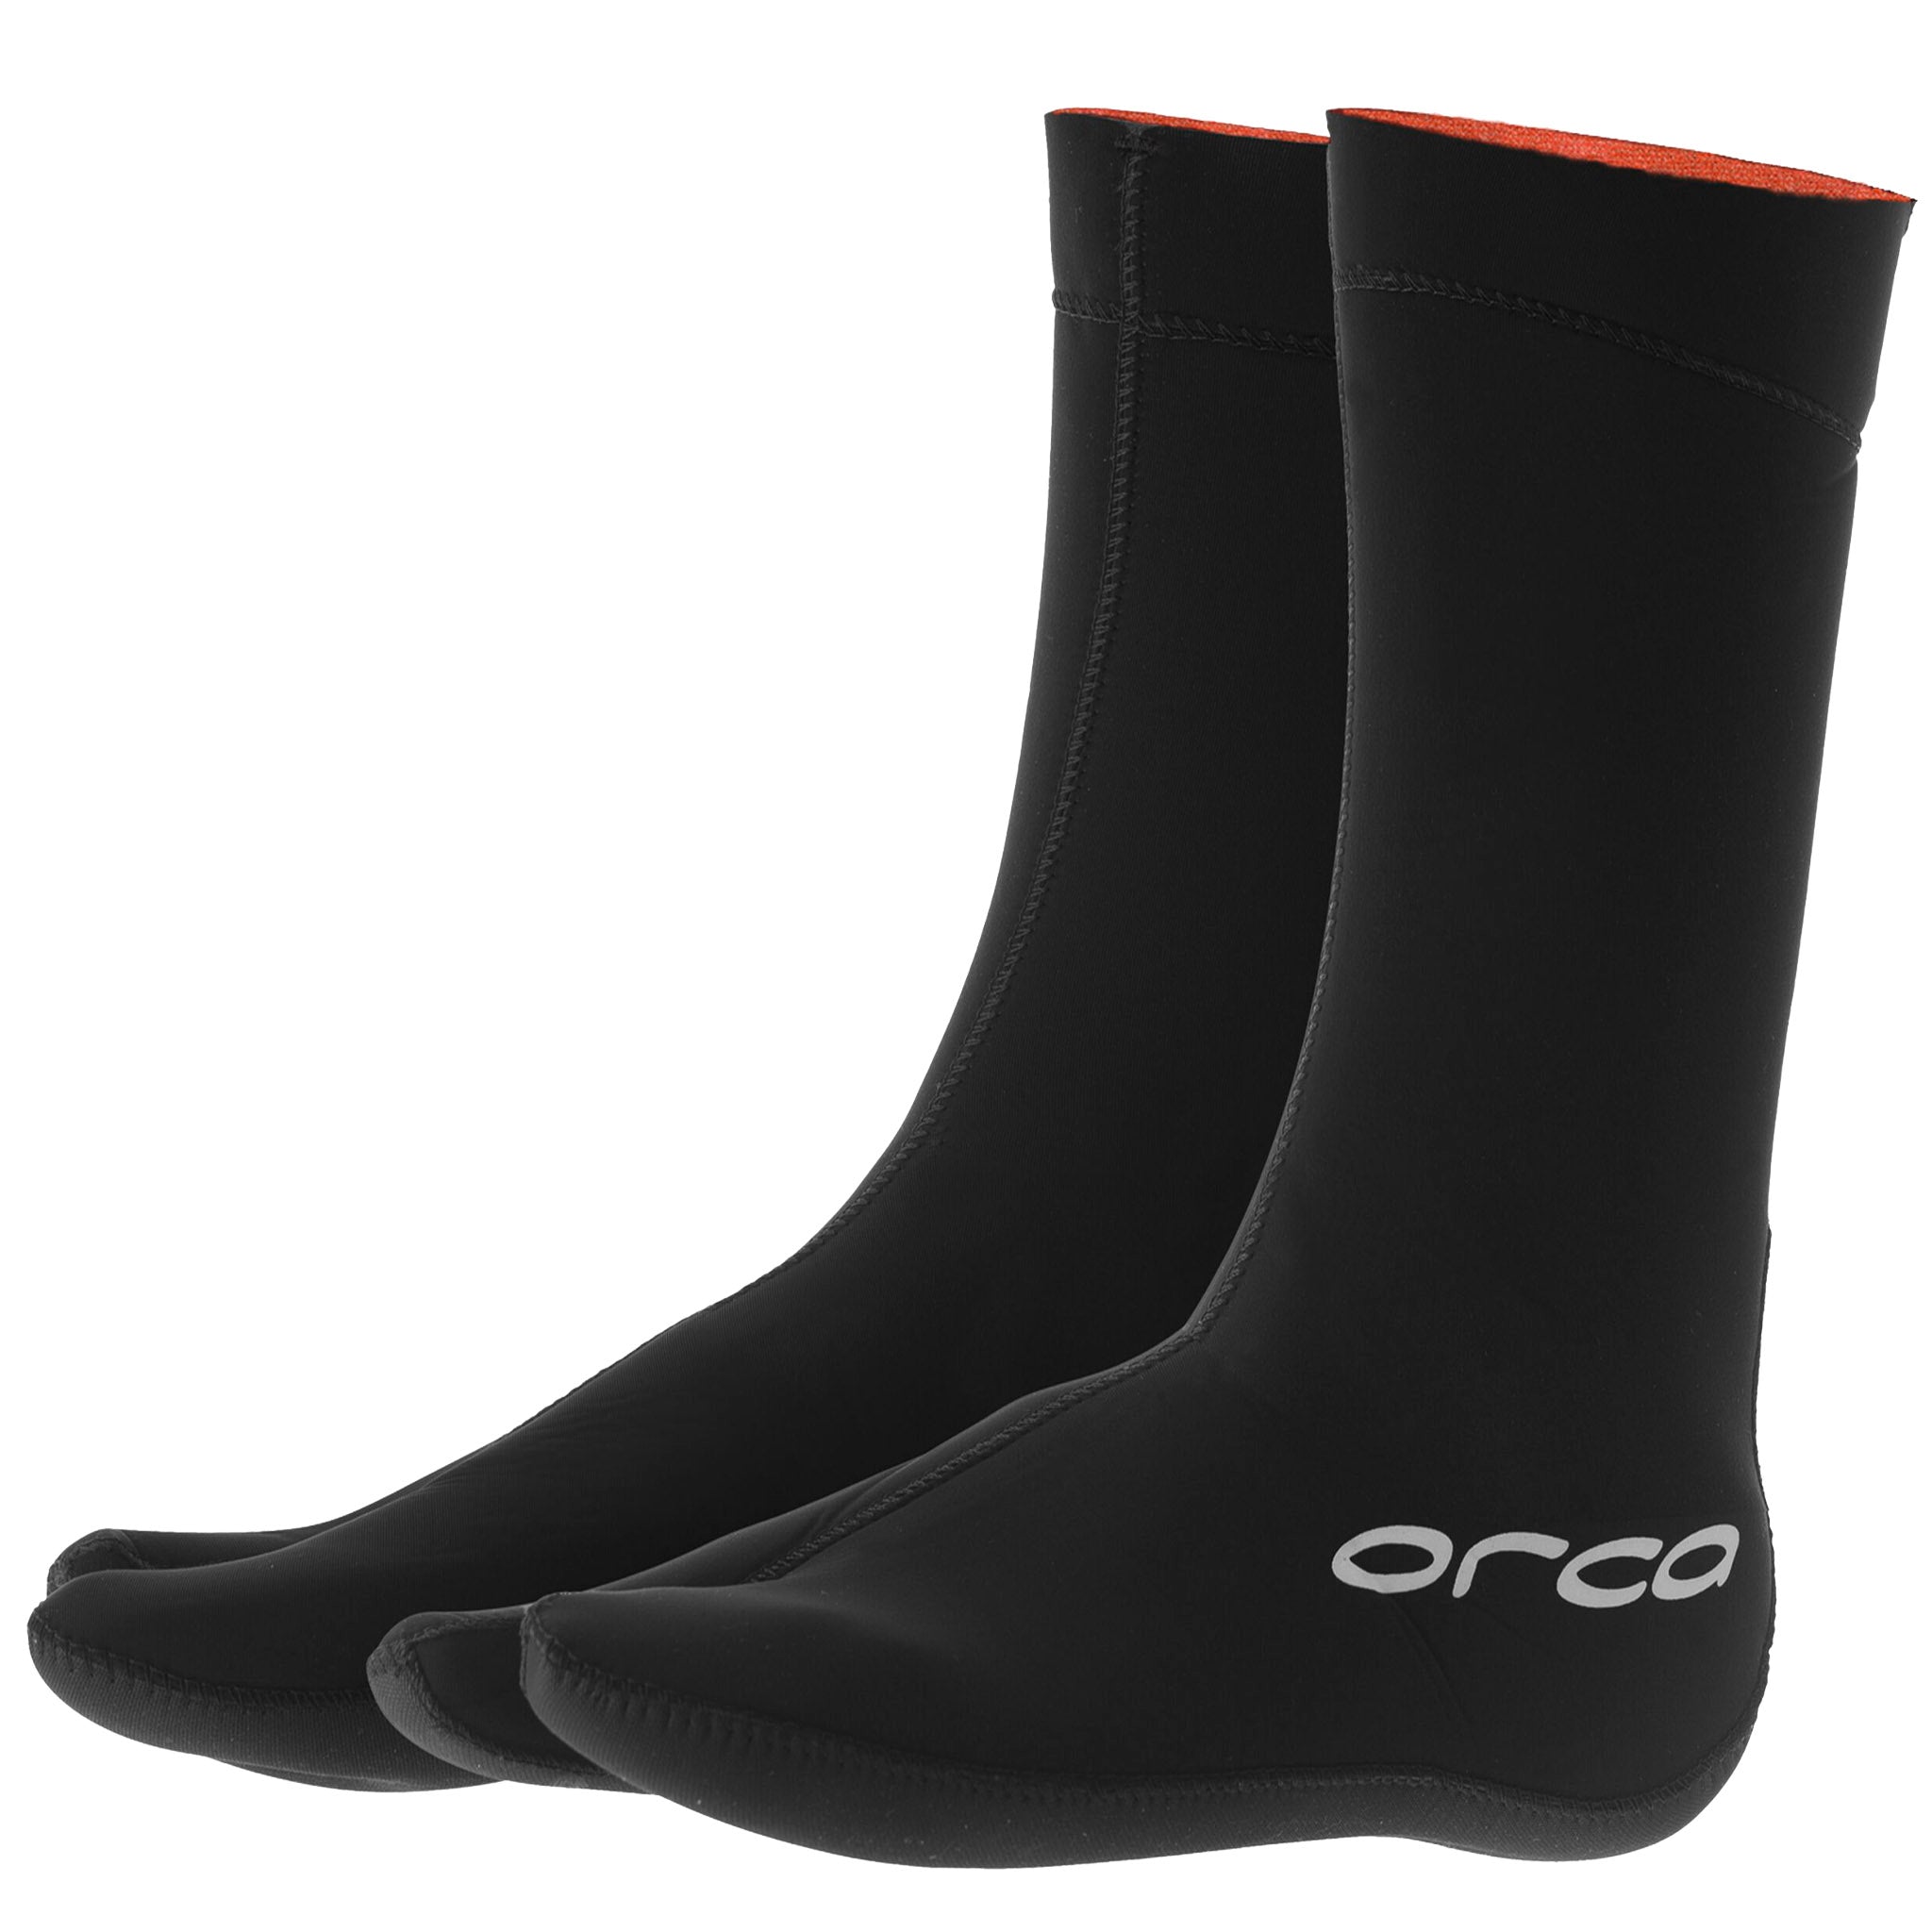 Orca Thermal Swim Socks Hydro Booties Neoprene Split Toe Unisex